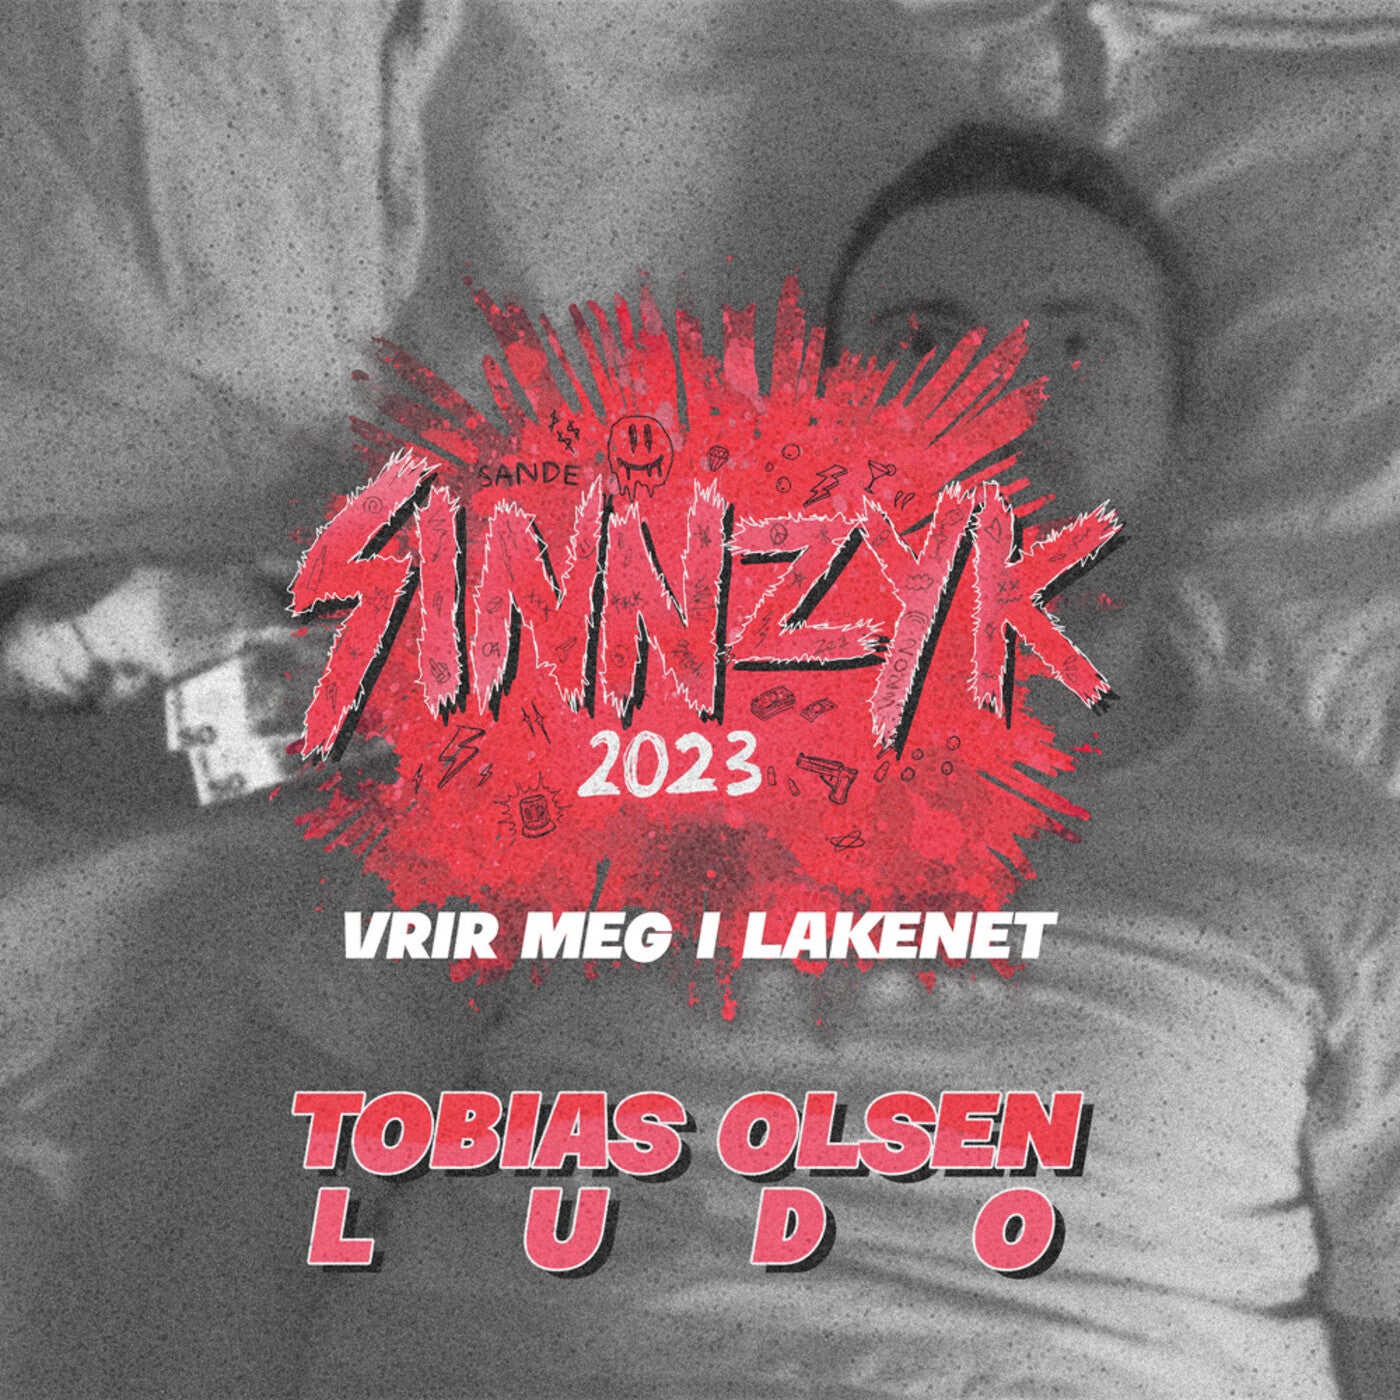 Scheur Sneeuwwitje Sloppenwijk Vrir Meg I Lakenet (Sinnzyk 2023) by Ludo and Tobias Olsen on Beatsource